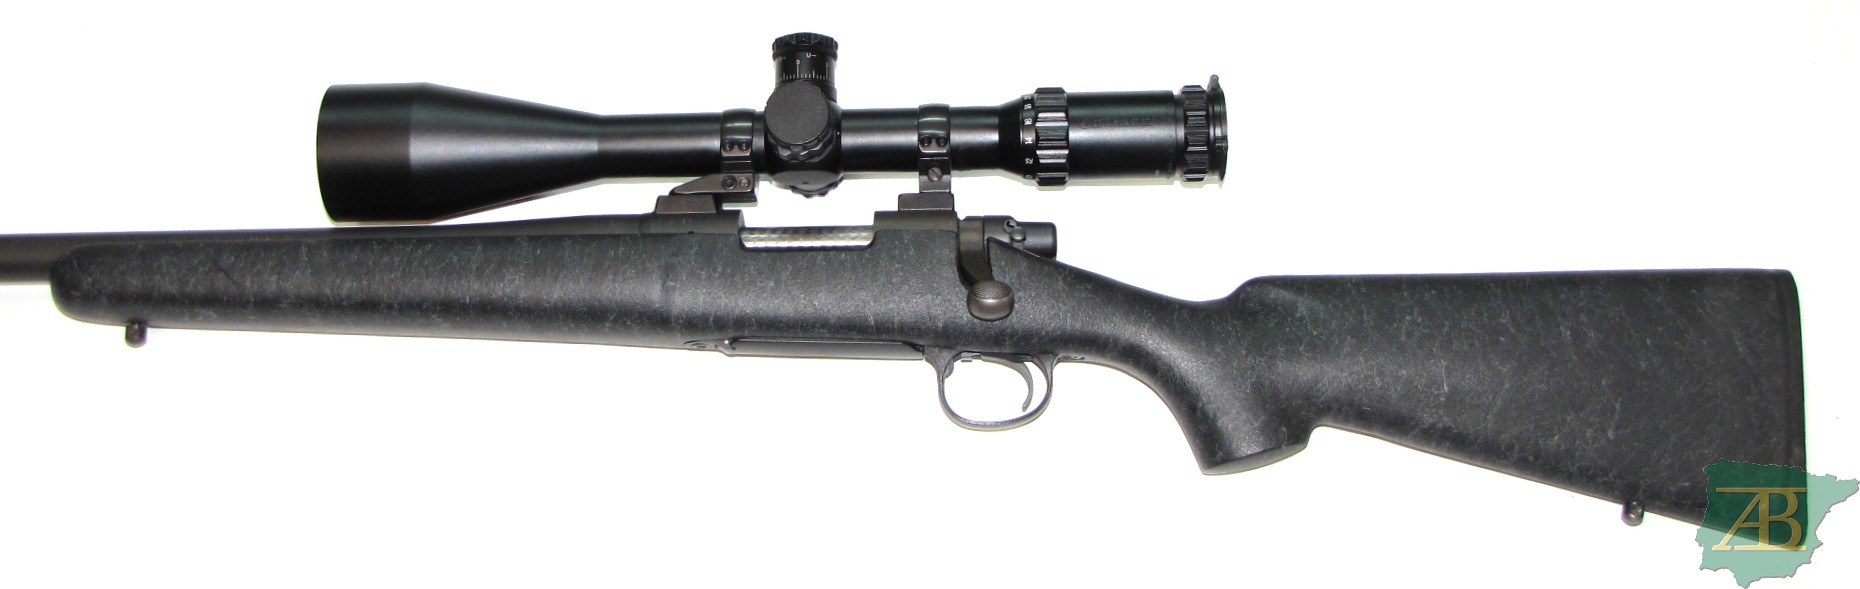 Rifle de cerrojo de tiro de ZURDO REMINGTON 700 VARMINT LH Ref REP2022-220-armeriaiberica-2